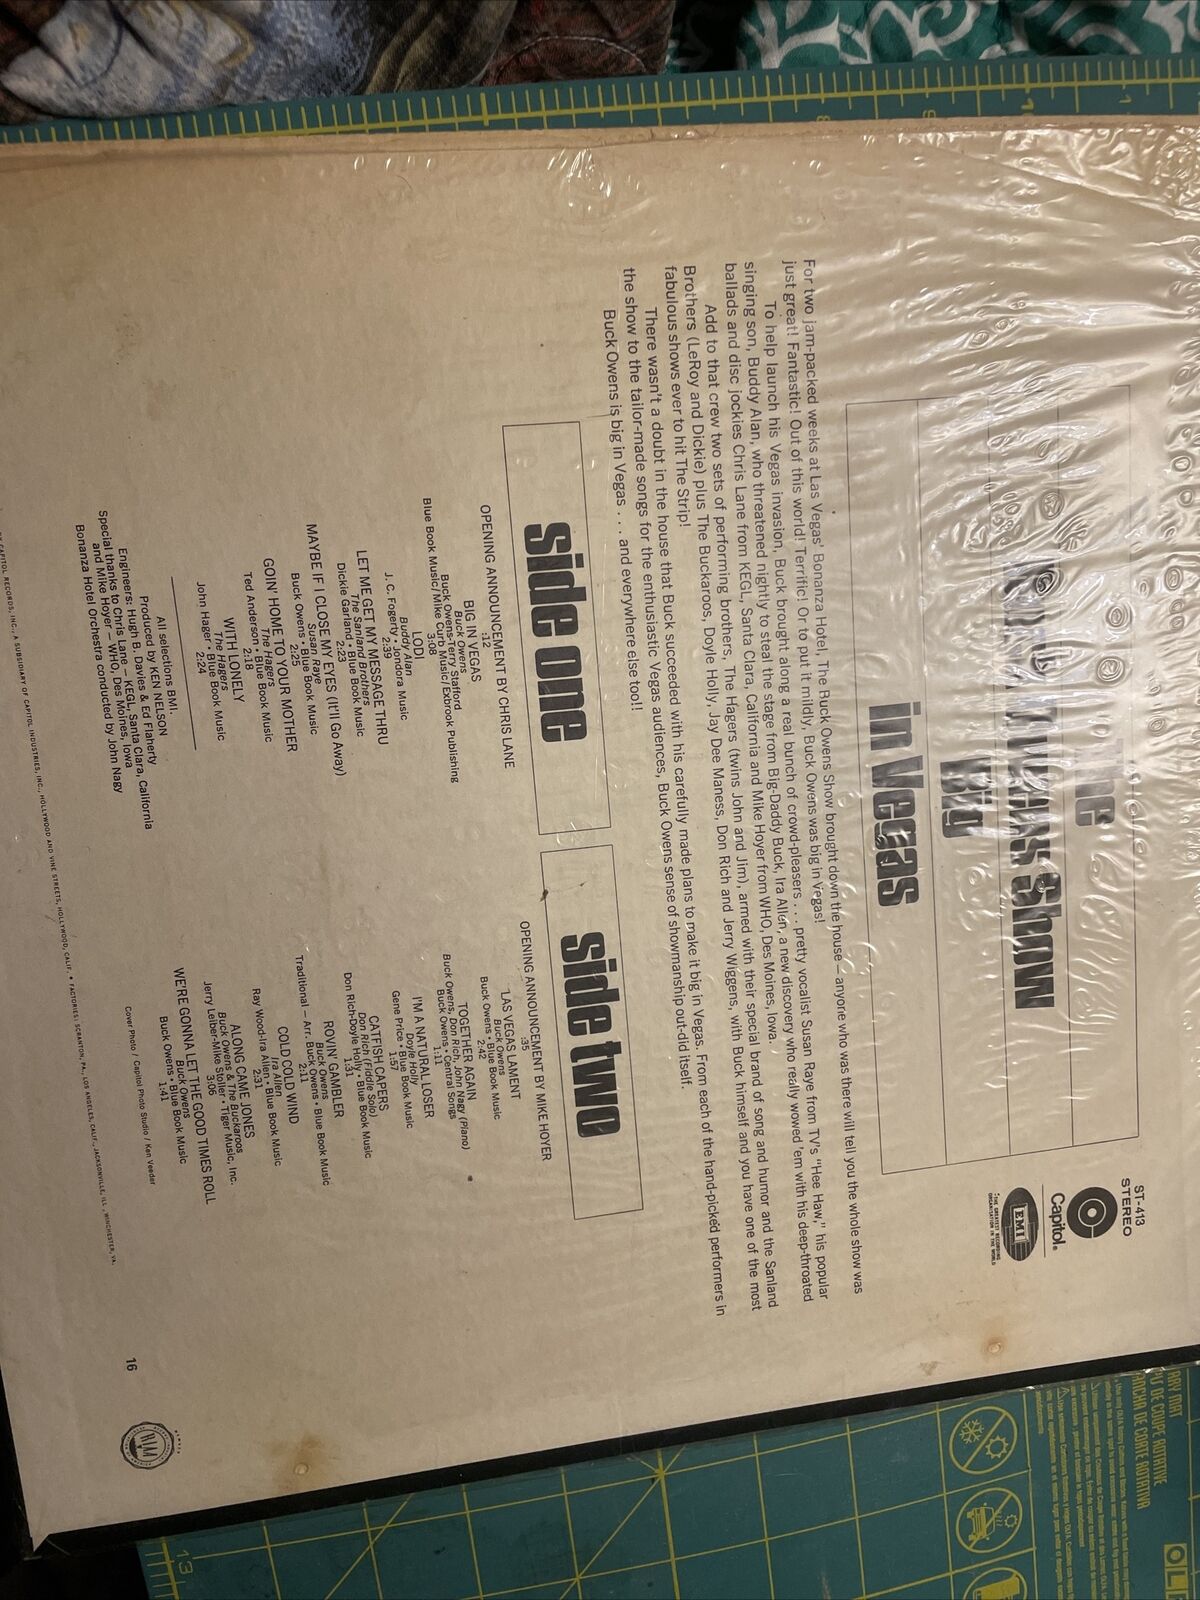 The BUCK OWENS Show BIG IN VEGAS Buckaroos Record LP Vinyl Capitol Vtg Country